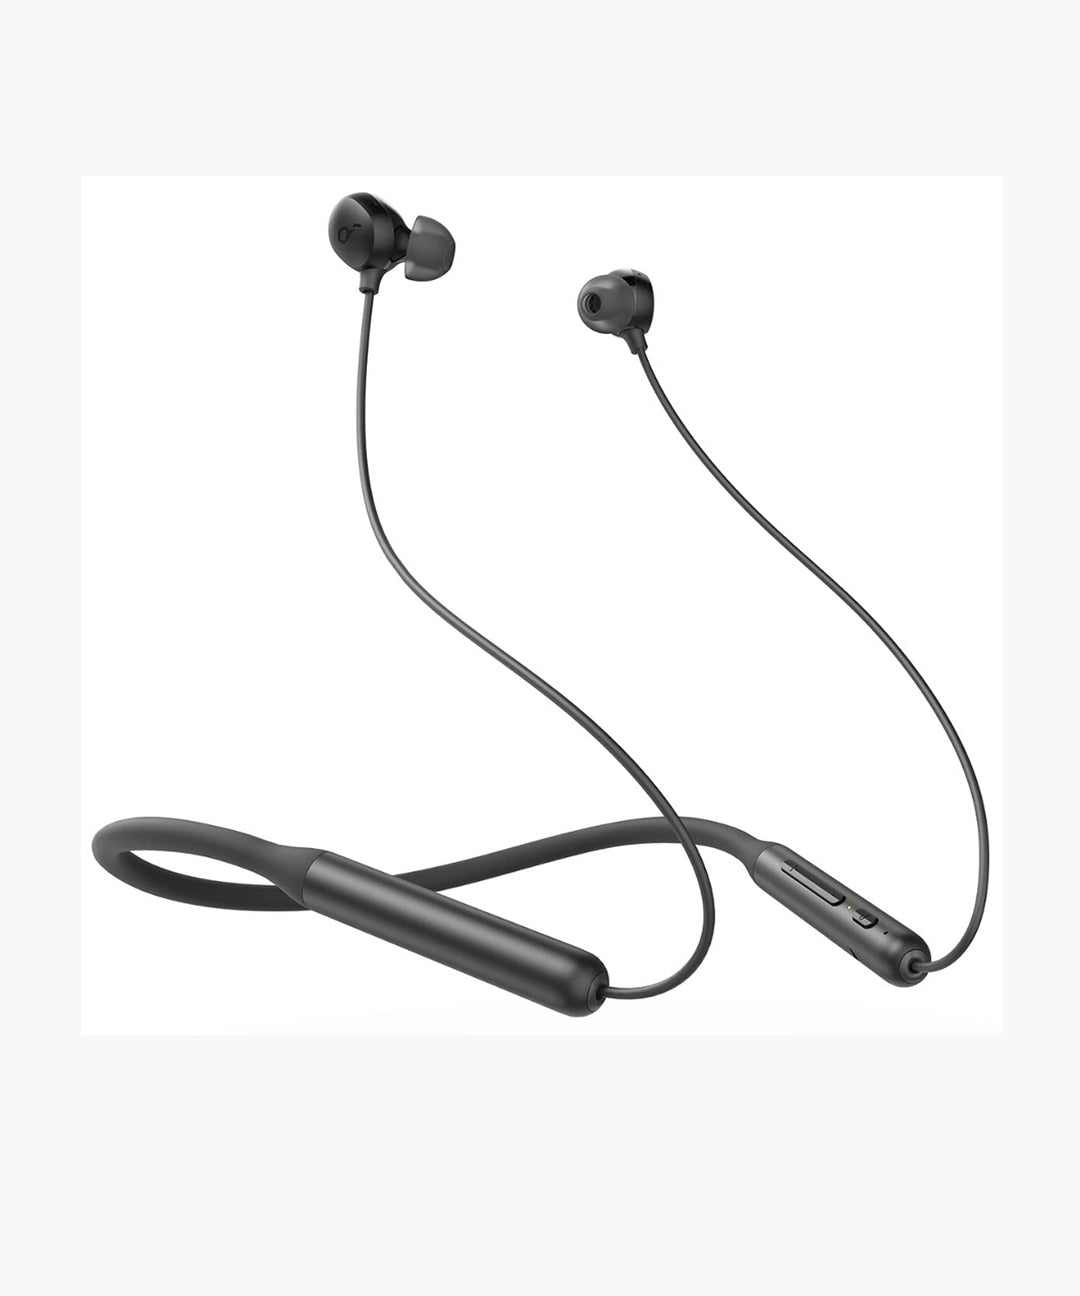 Anker Soundcore Life U2i Wireless Headphones, Neckband Bluetooth Headphone – Black